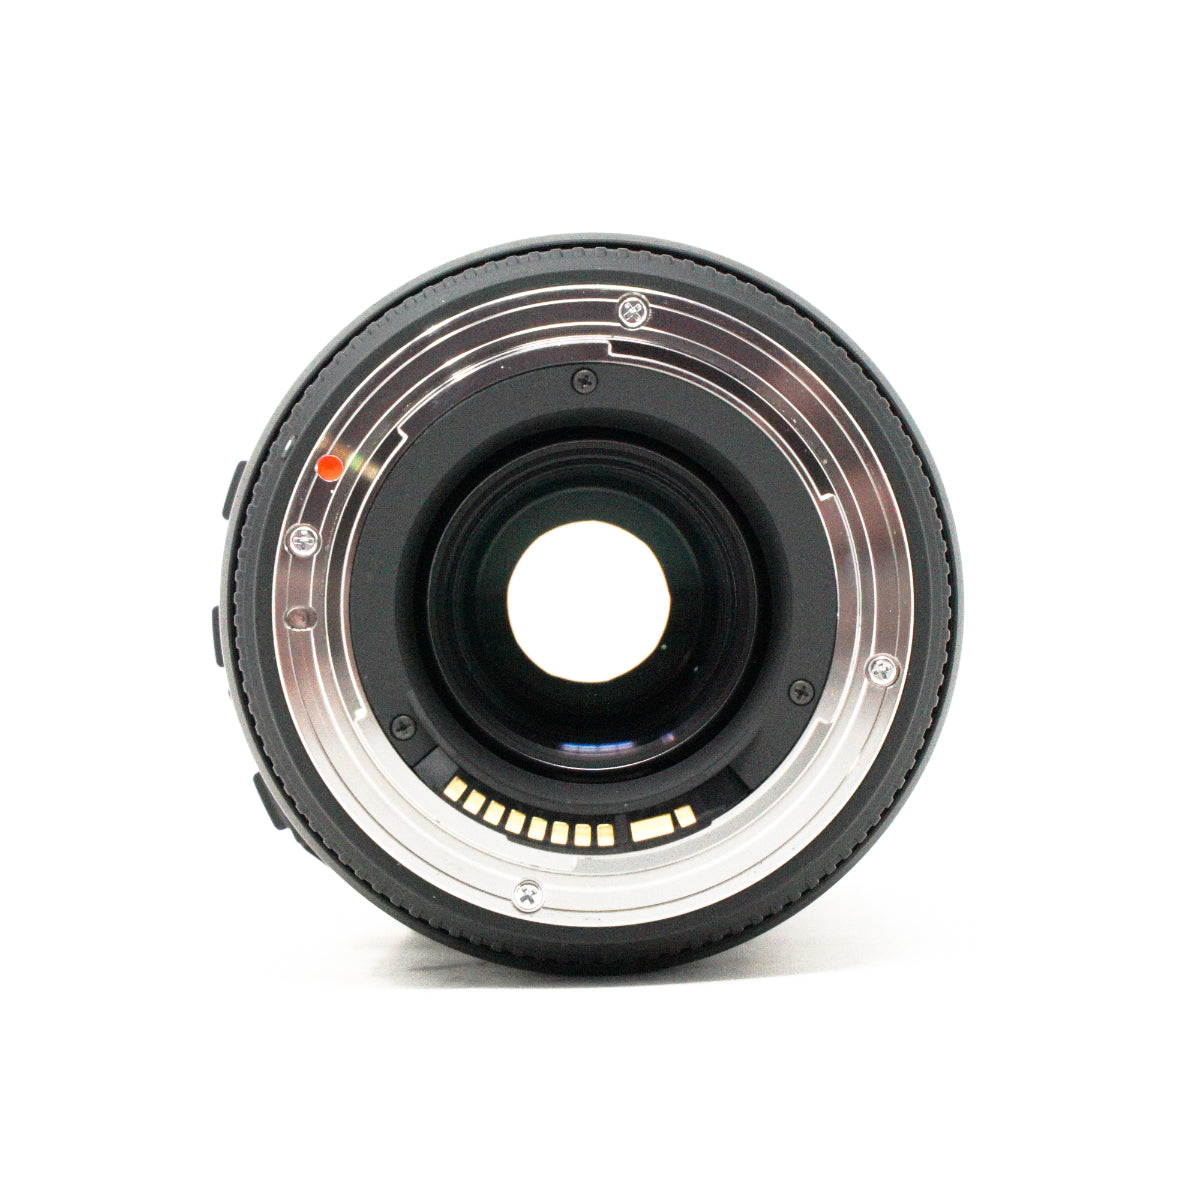 Used Sigma 105mm f2.6 EX DG Macro OS Lens